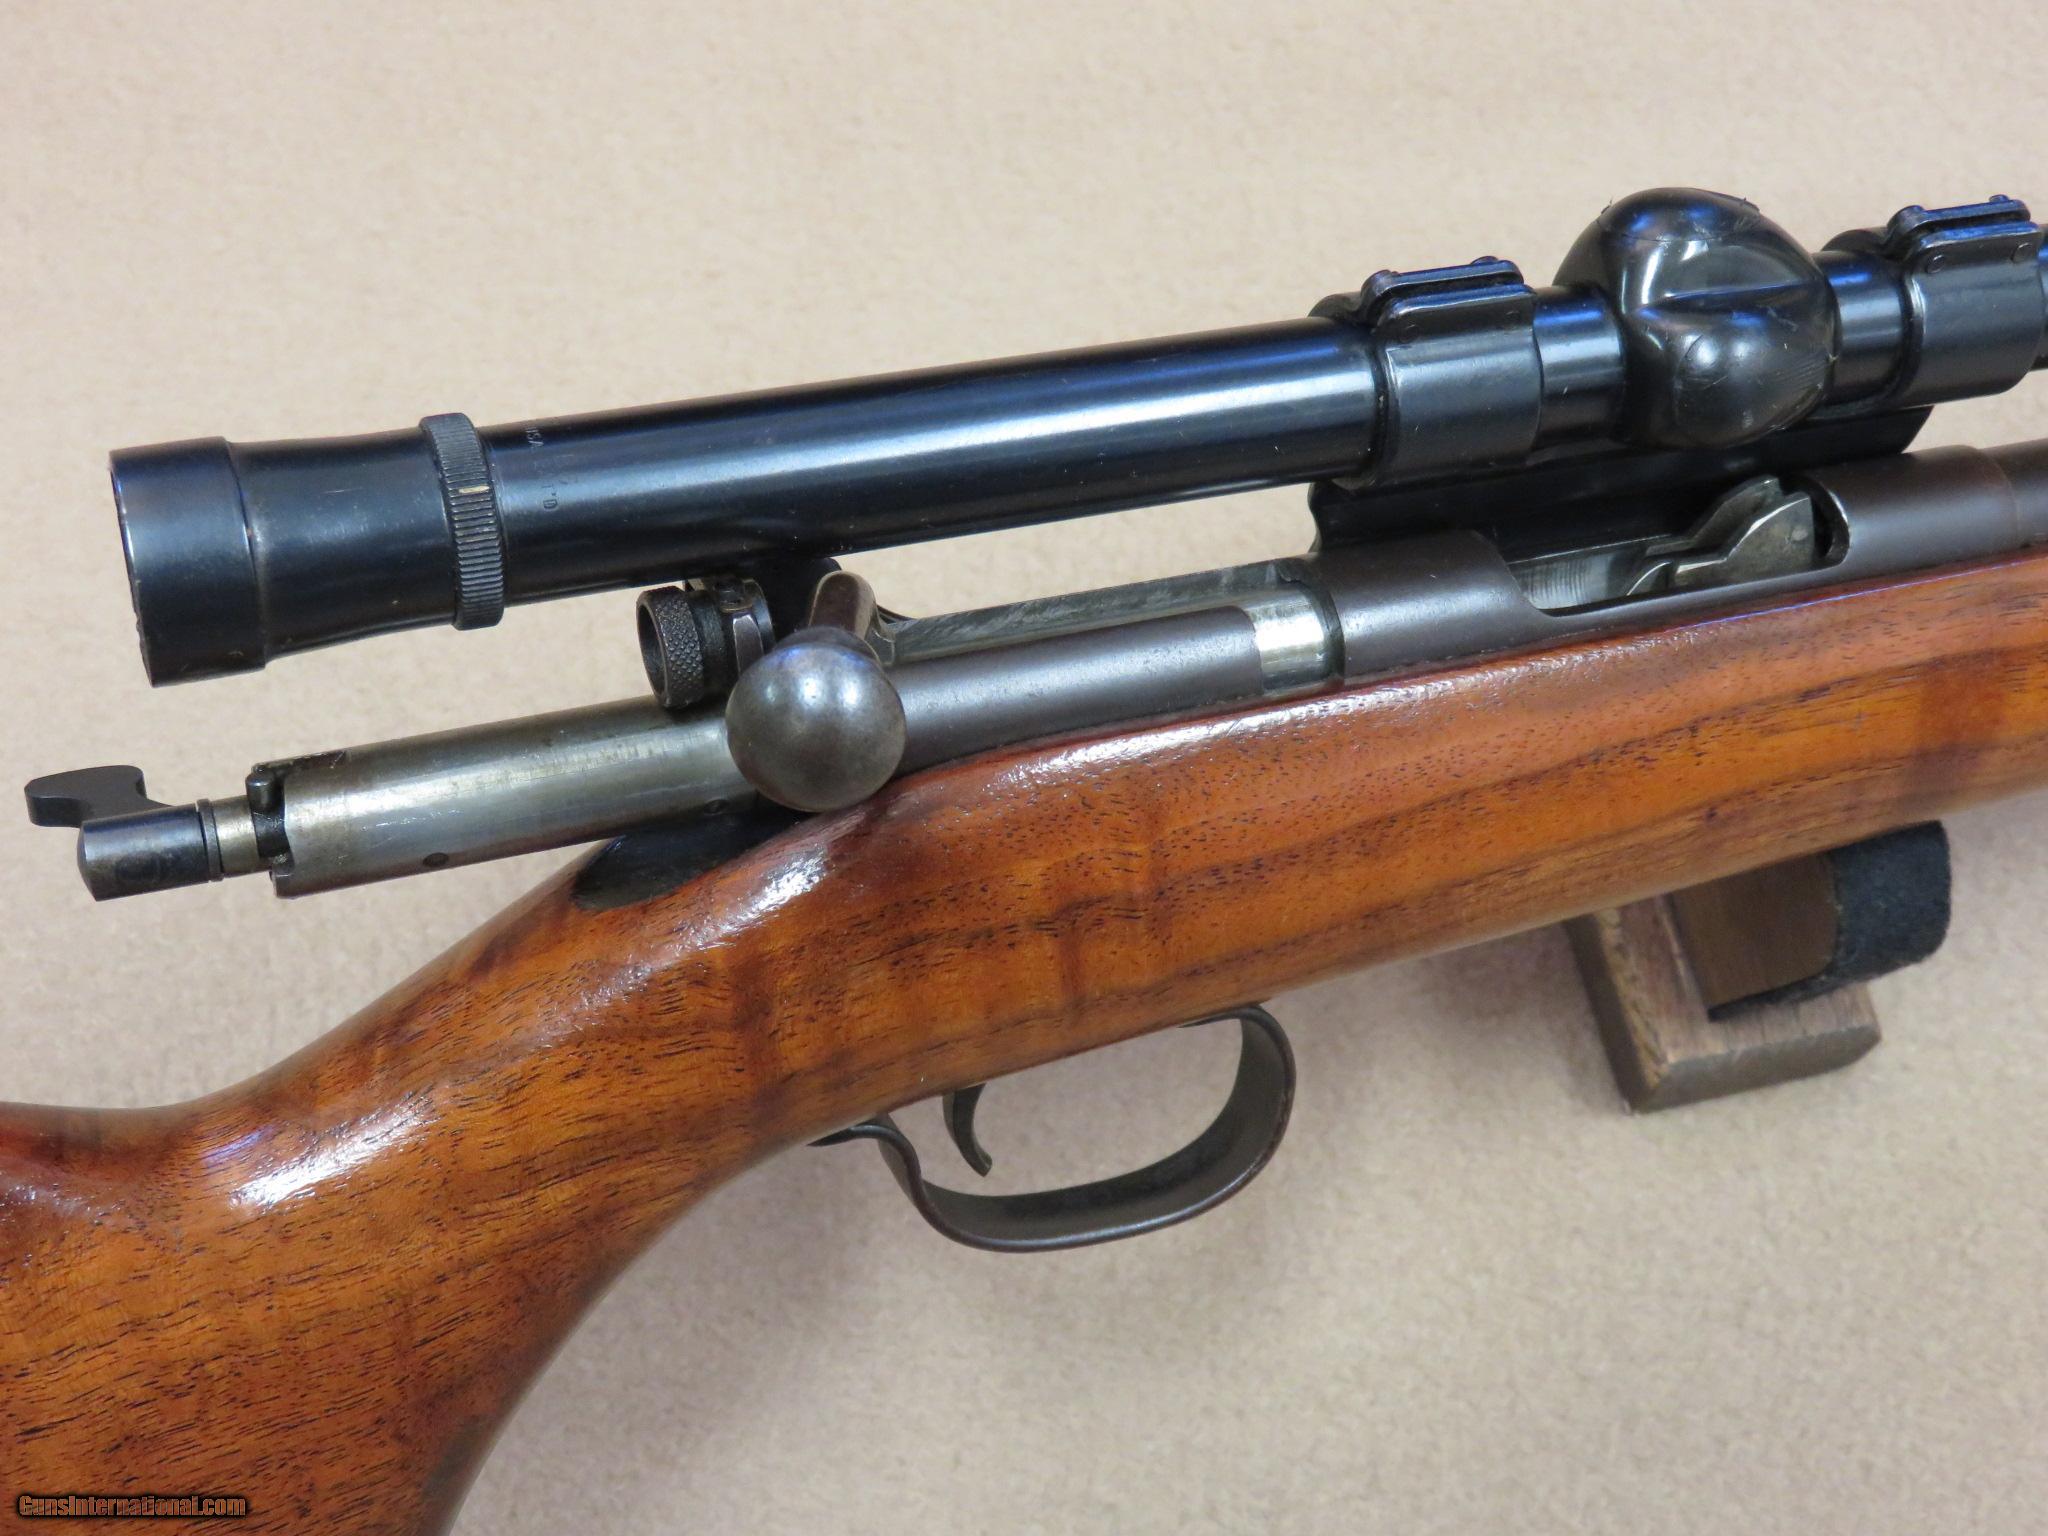 1937 Remington Model 341-P .22 Rifle with Vintage Weaver Scope